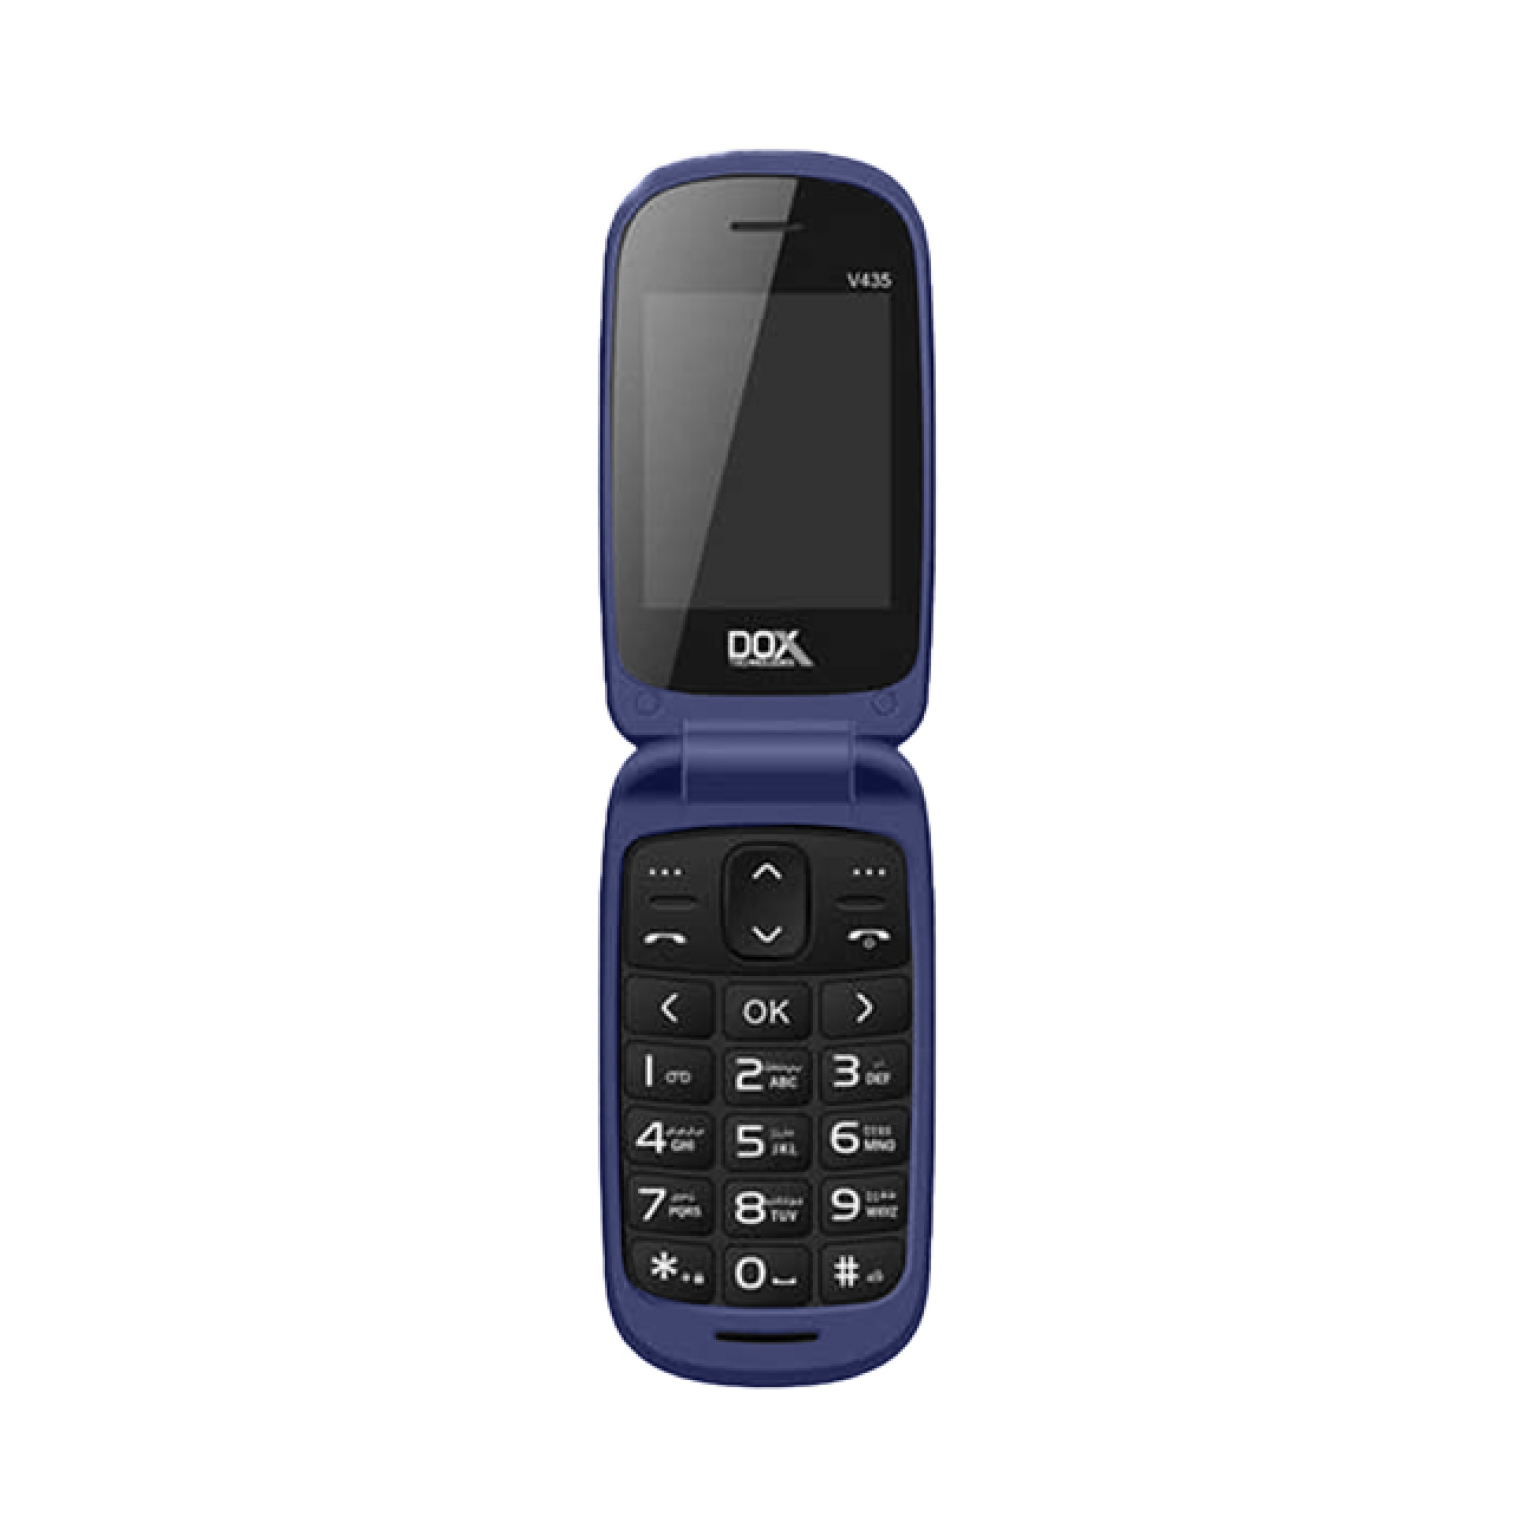 Dox V435 mobile phone dark blue 1